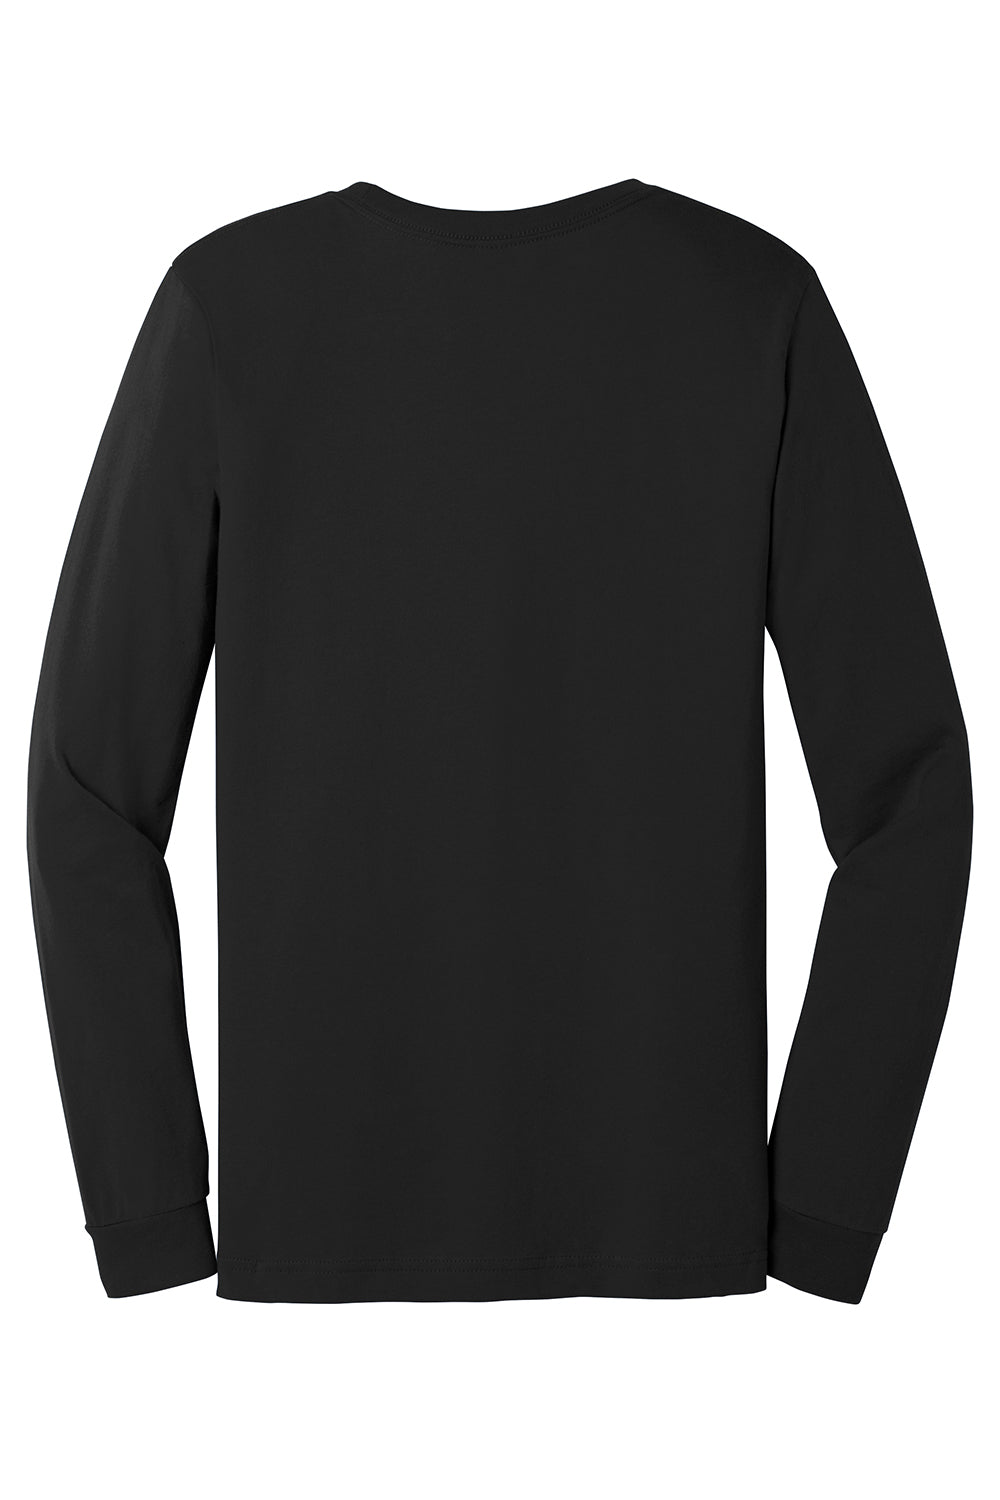 Bella + Canvas BC3501/3501 Mens Jersey Long Sleeve Crewneck T-Shirt Black Flat Back